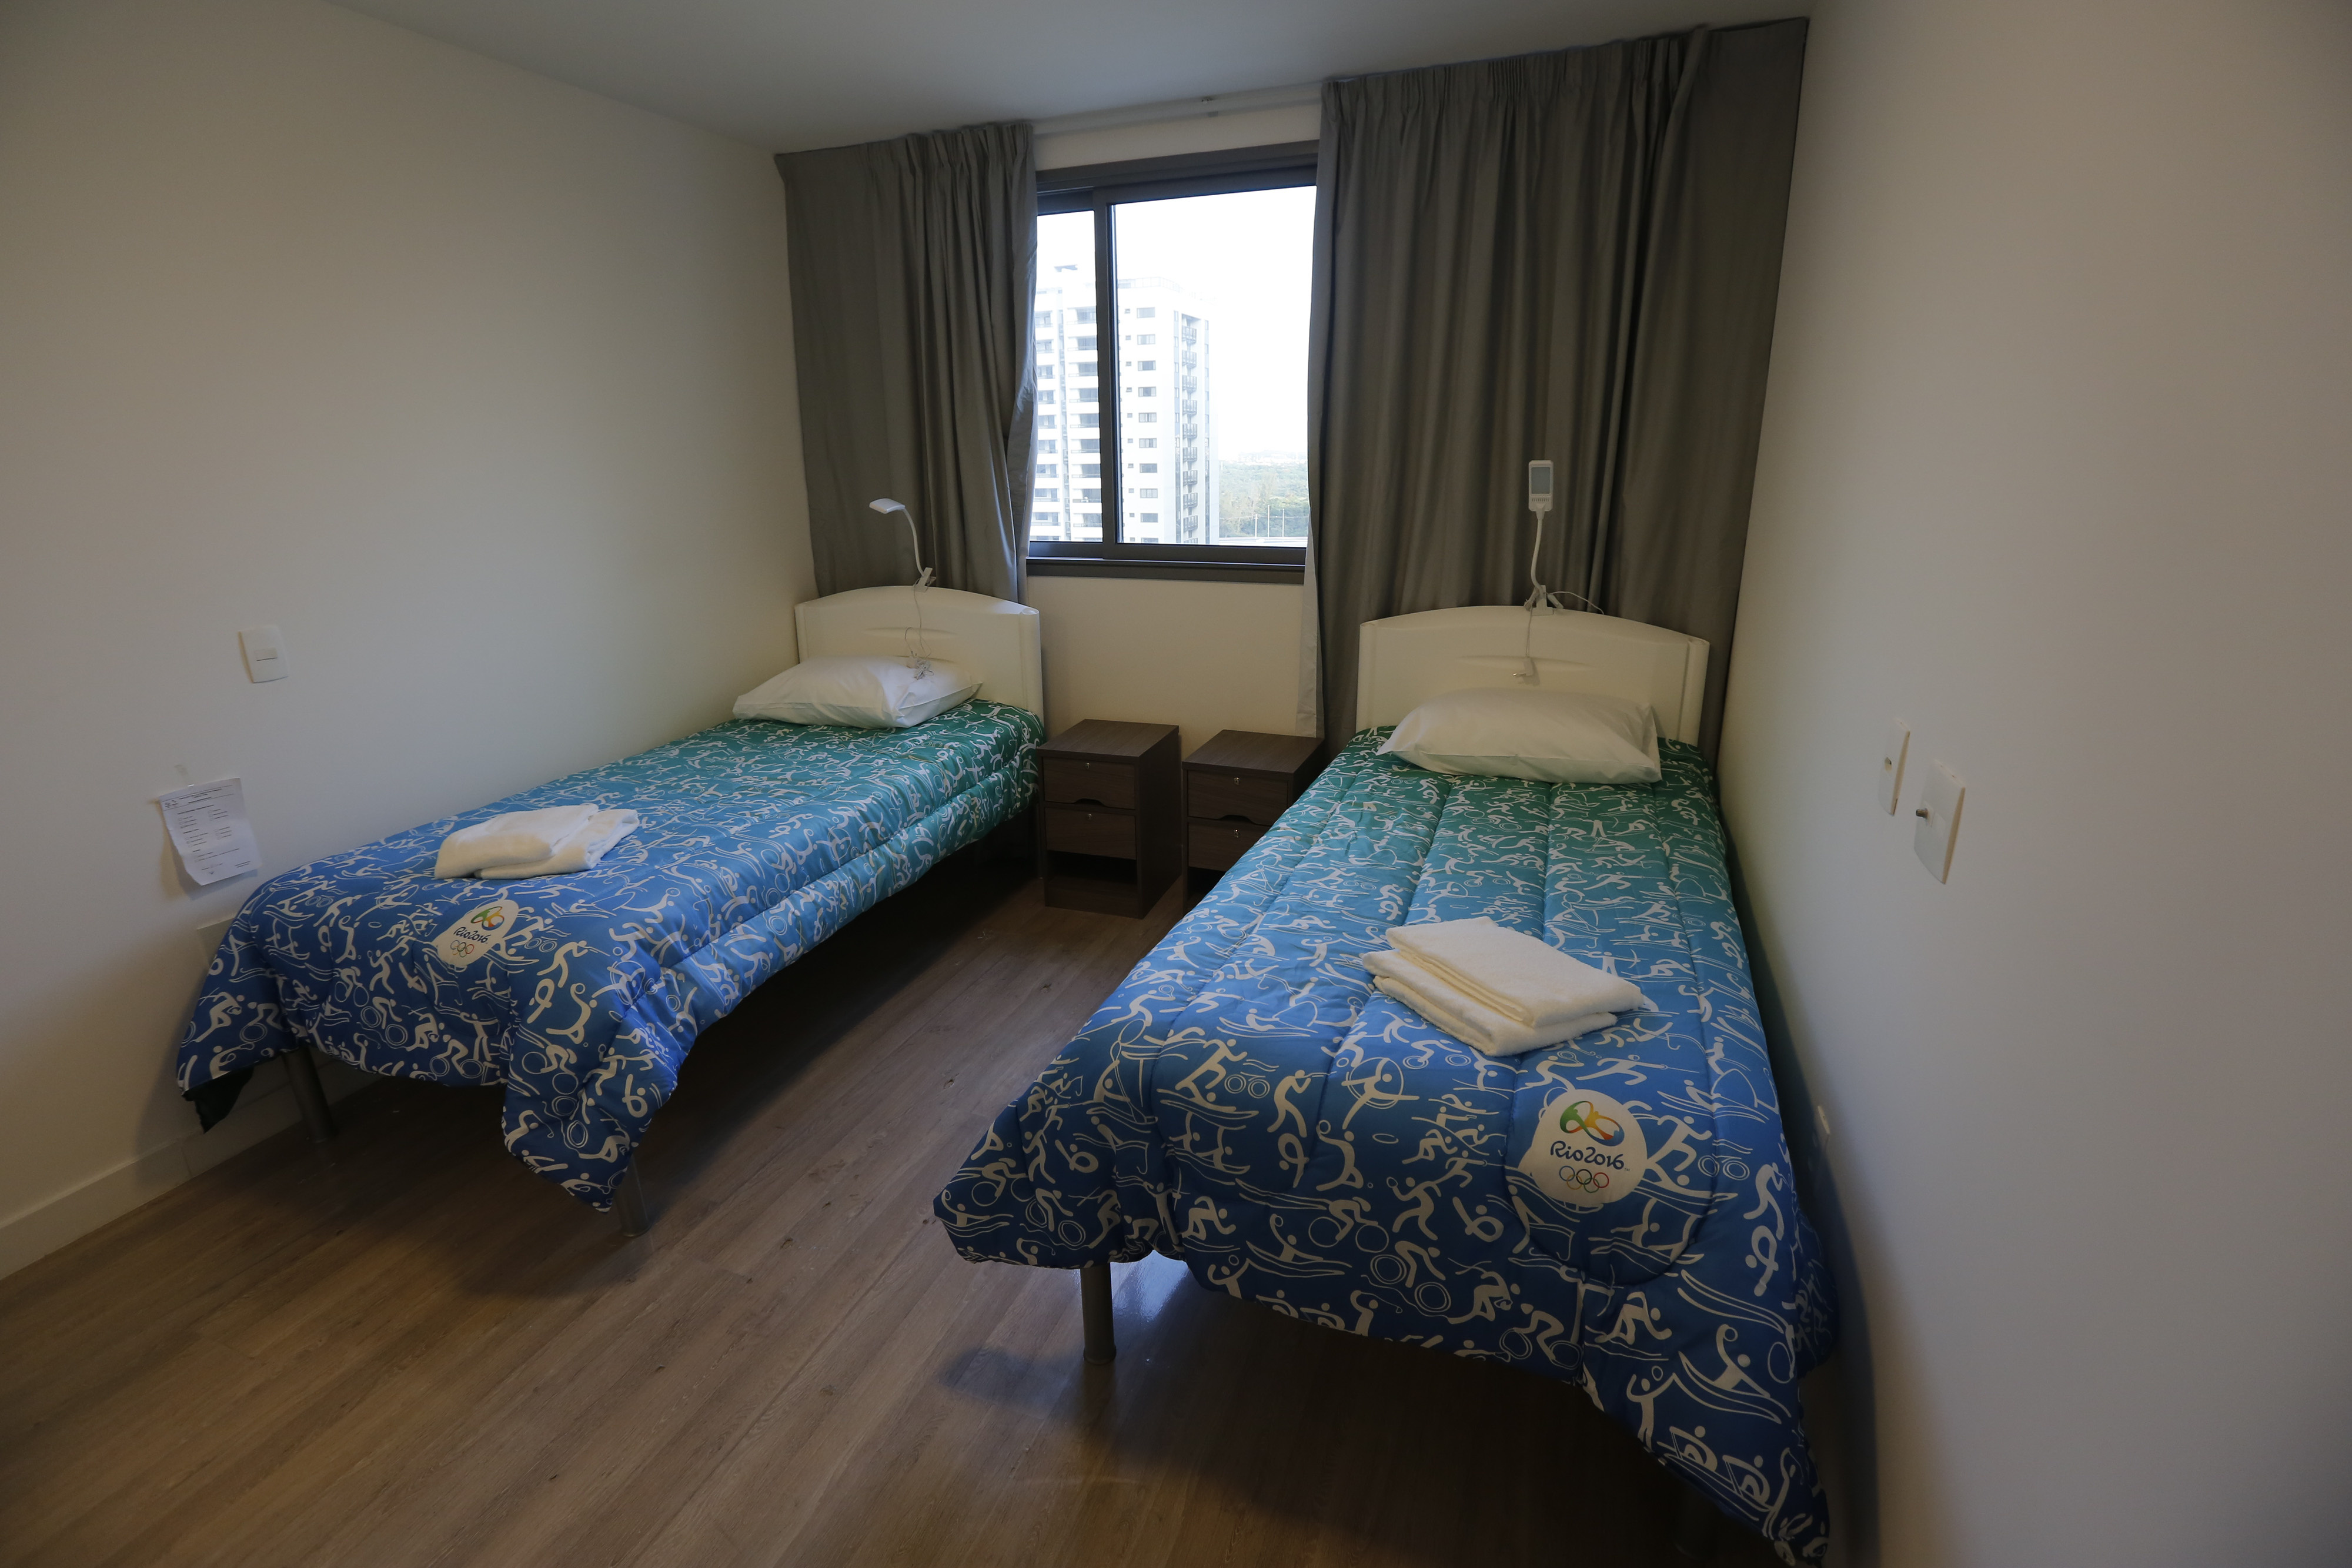 Rio Olympic Village bedroom